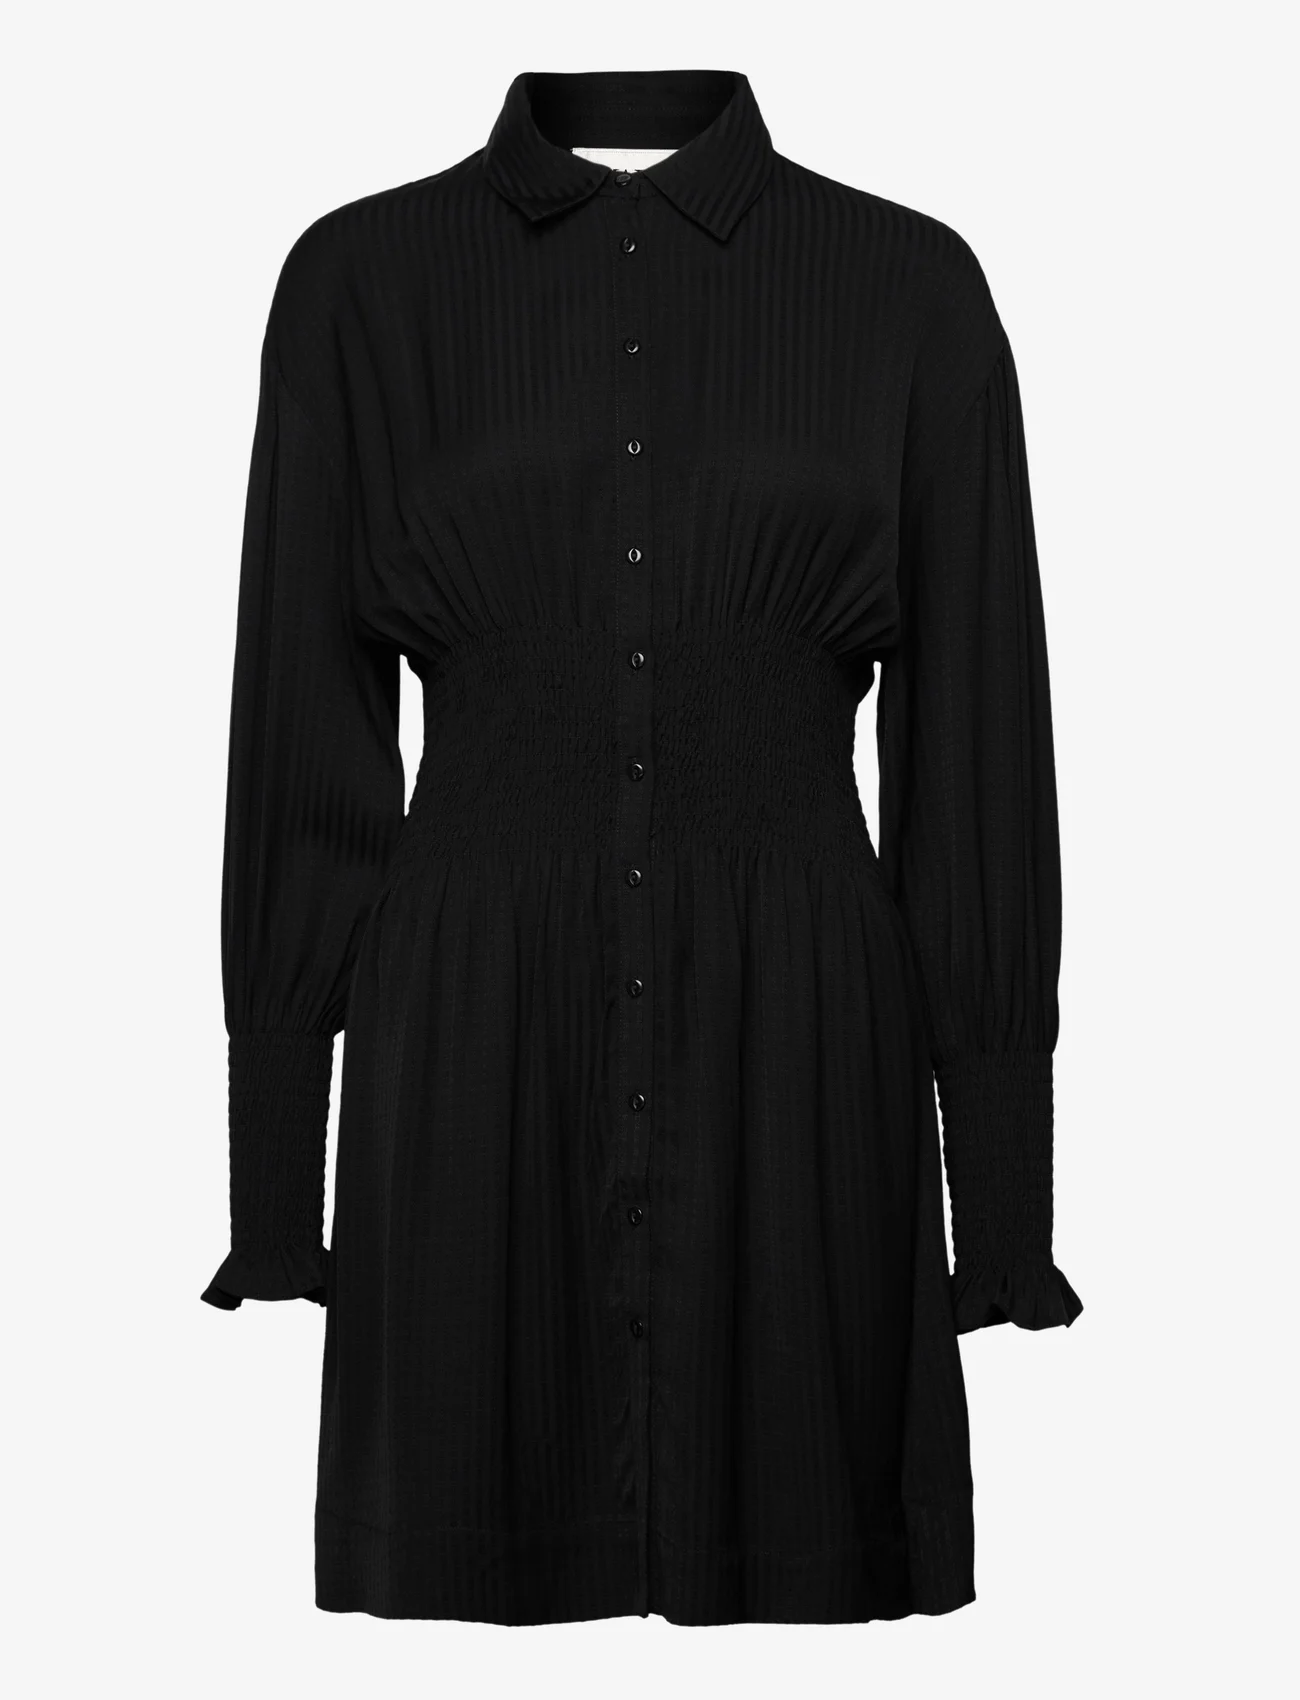 MAUD - Karoline Dress Short - hemdkleider - black - 0